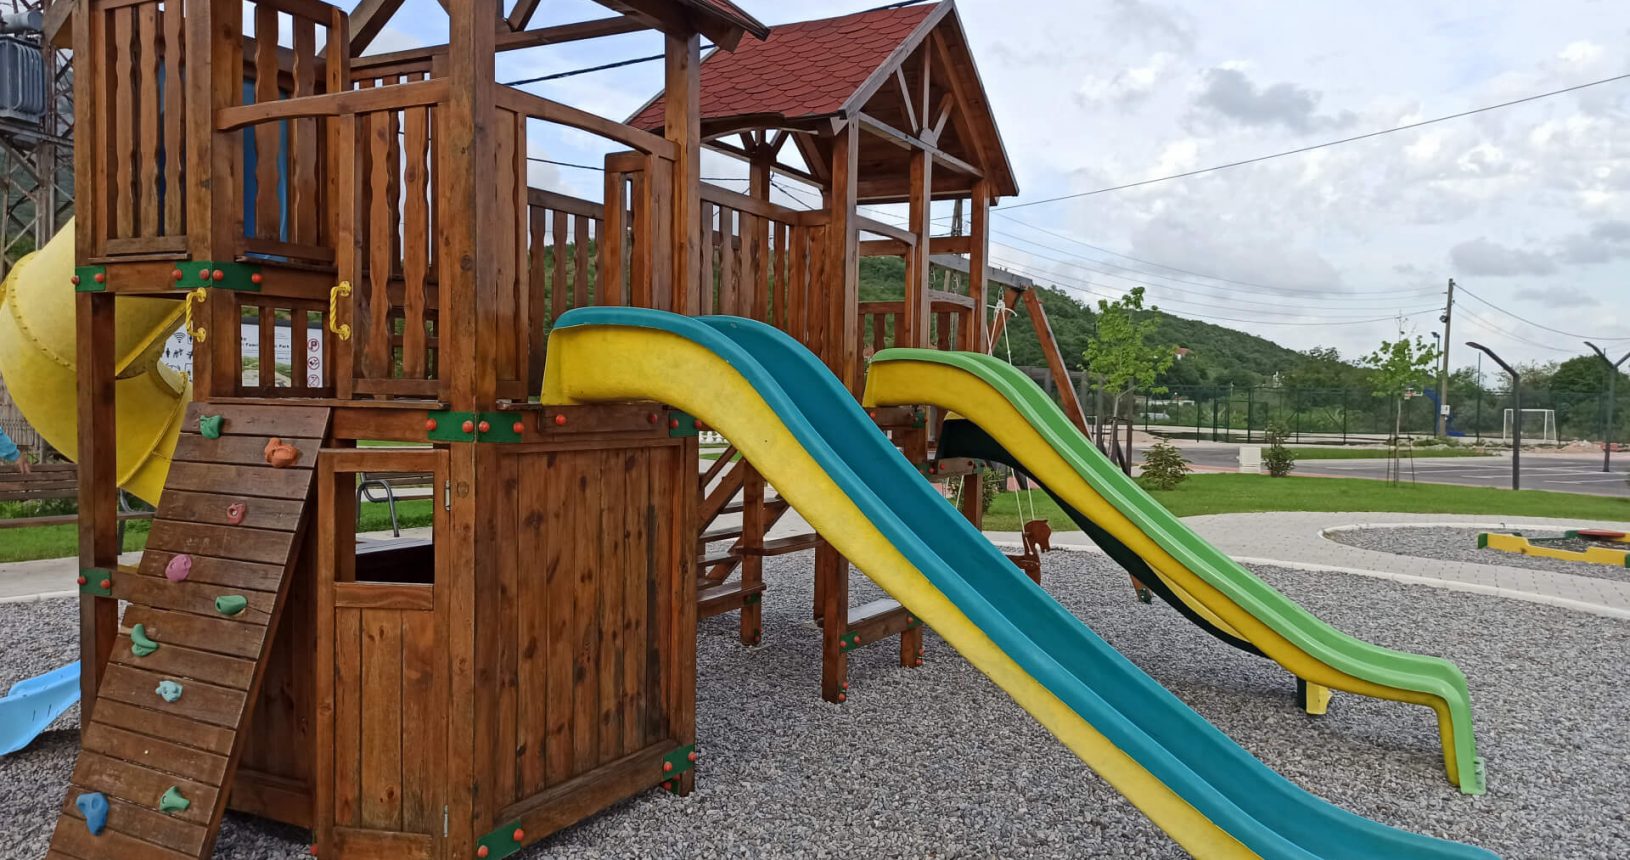 Very cool wooden playground at Hajdari Family Public Park